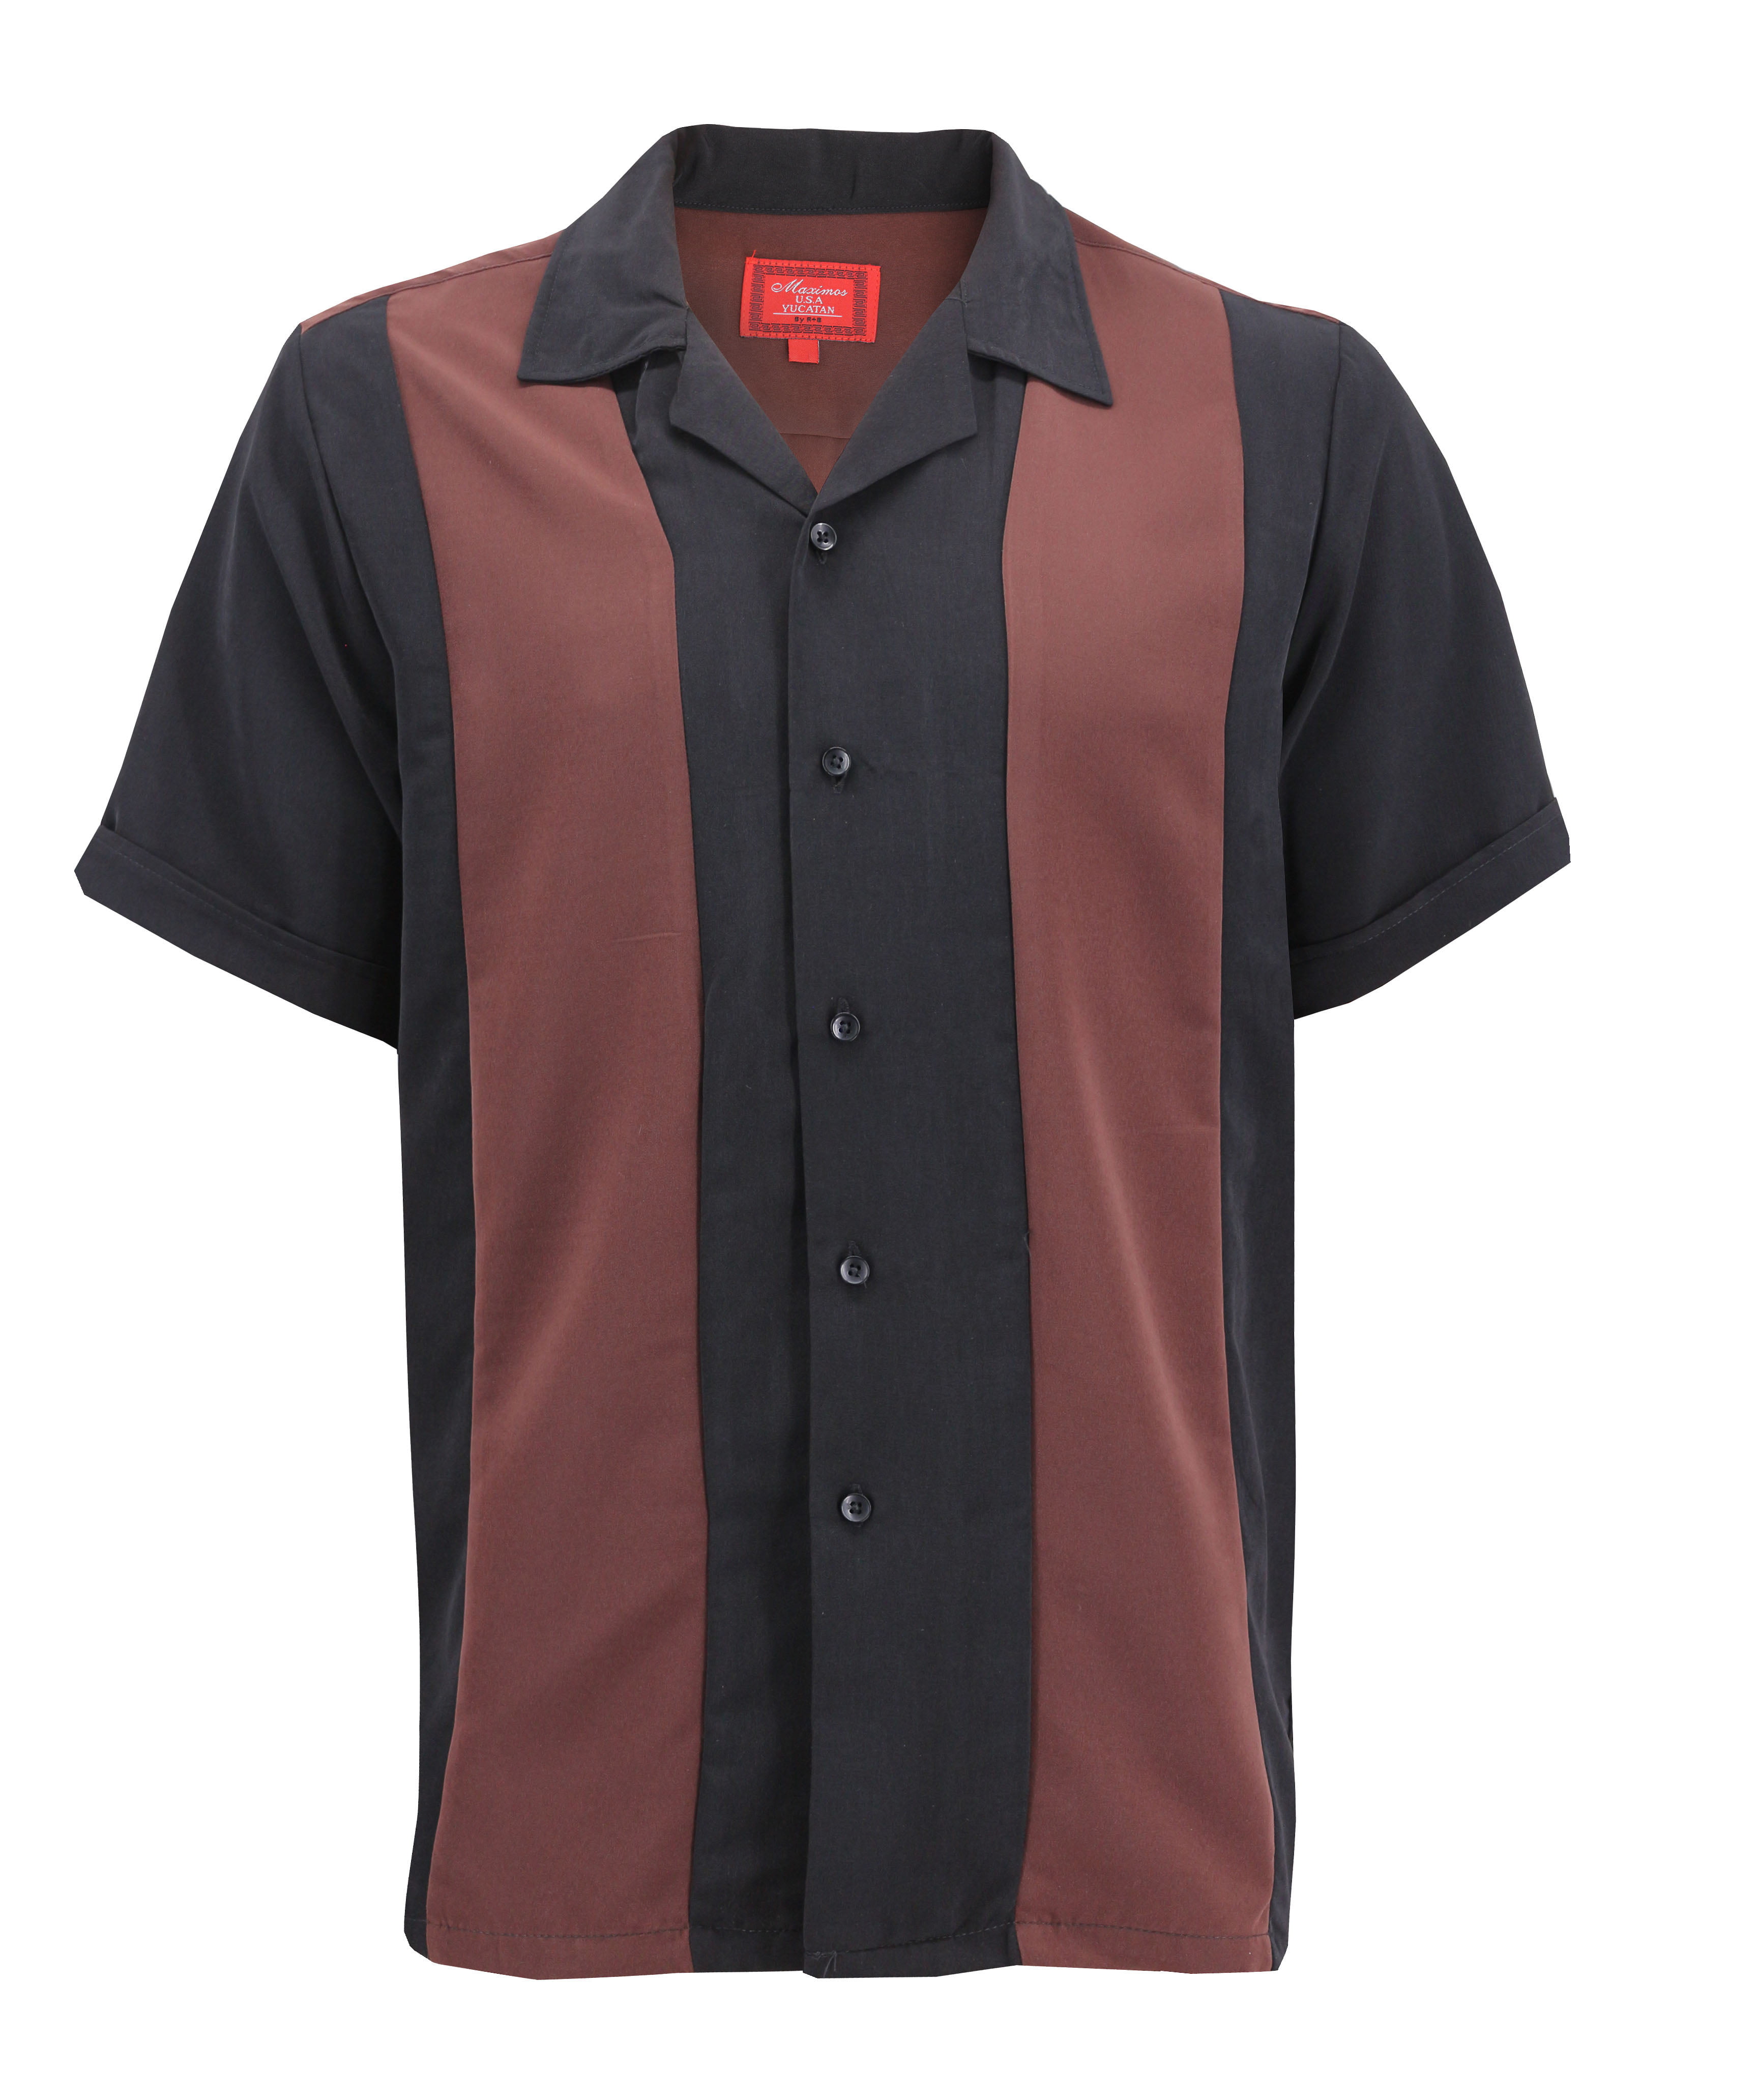 Maximos - Men's Two Tone Bowling Casual Dress Shirt (Dark Brown / Black, 5XL) - Walmart.com ...